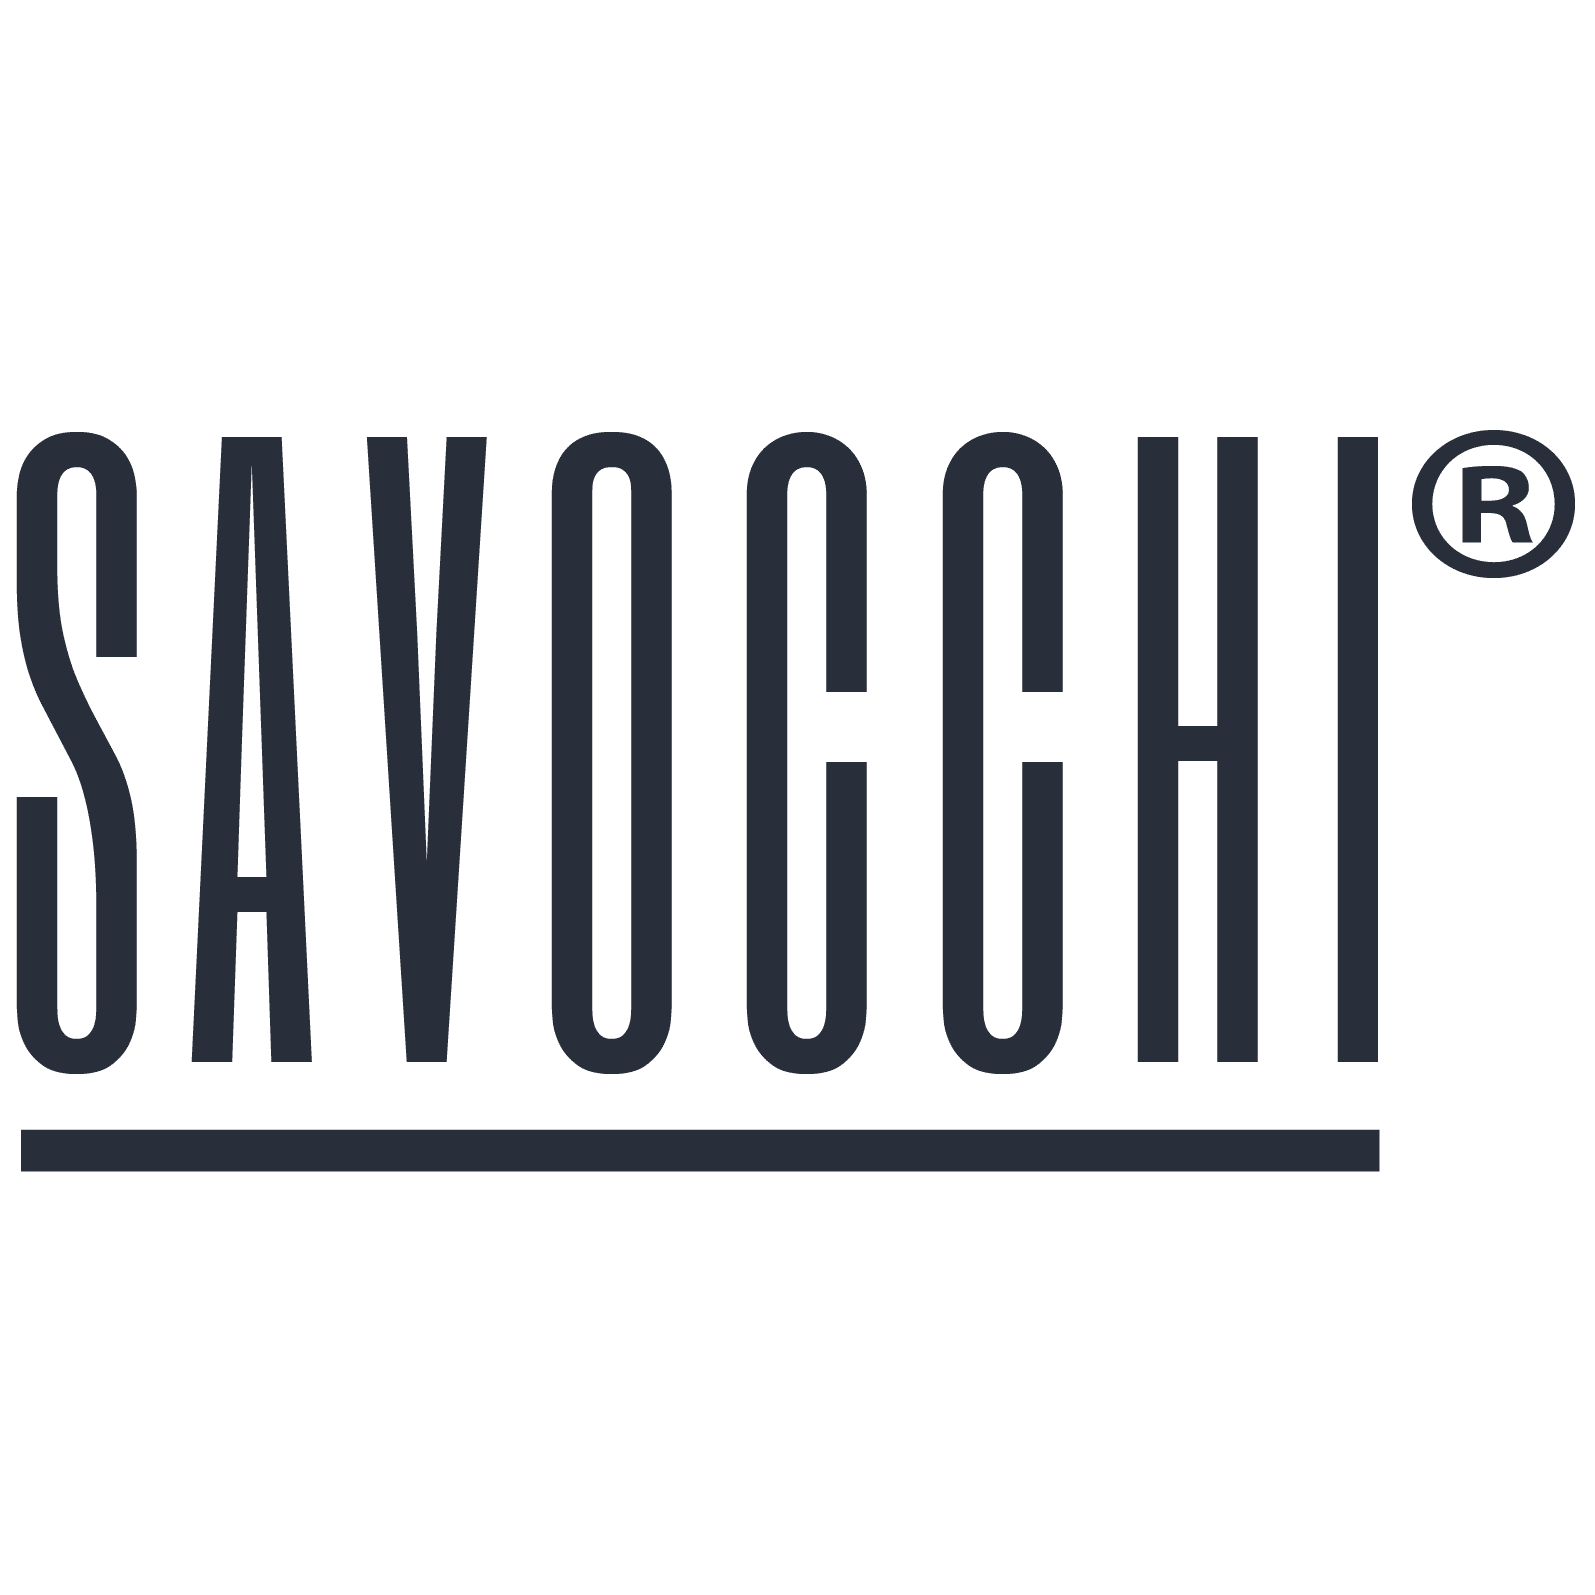 (c) Savocchi.com